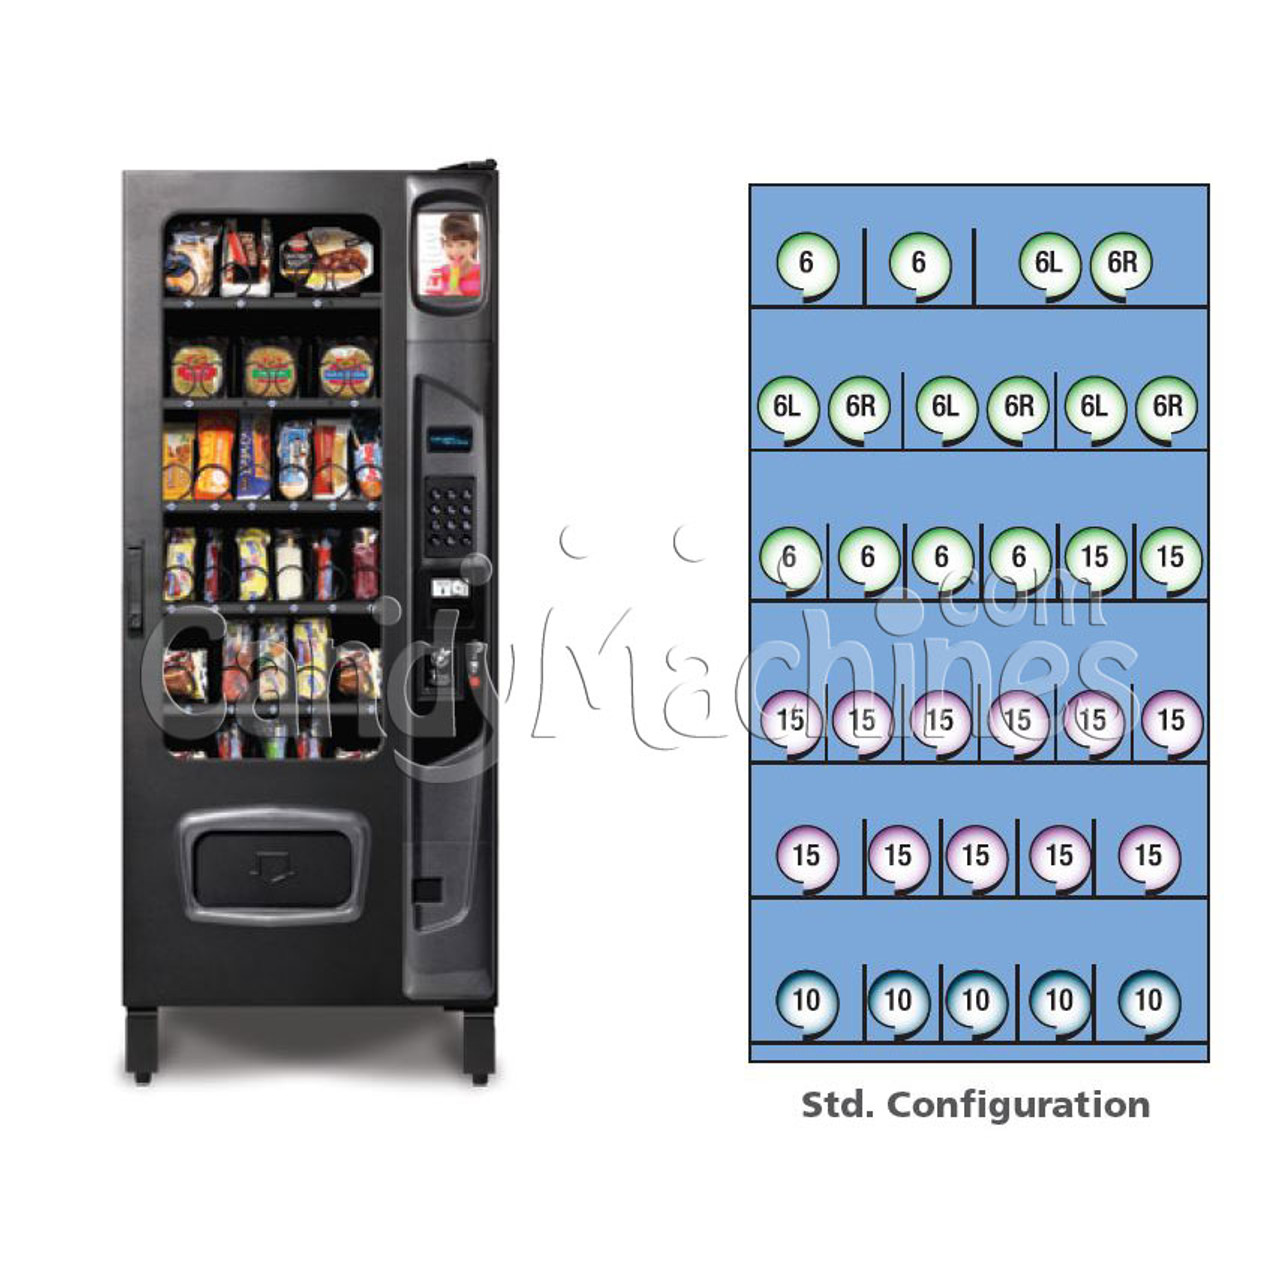 https://cdn11.bigcommerce.com/s-xun5w23utl/images/stencil/1280x1280/products/4924/8266/frozen-food-vending-machines-configuration__13548.1607810085.jpg?c=1